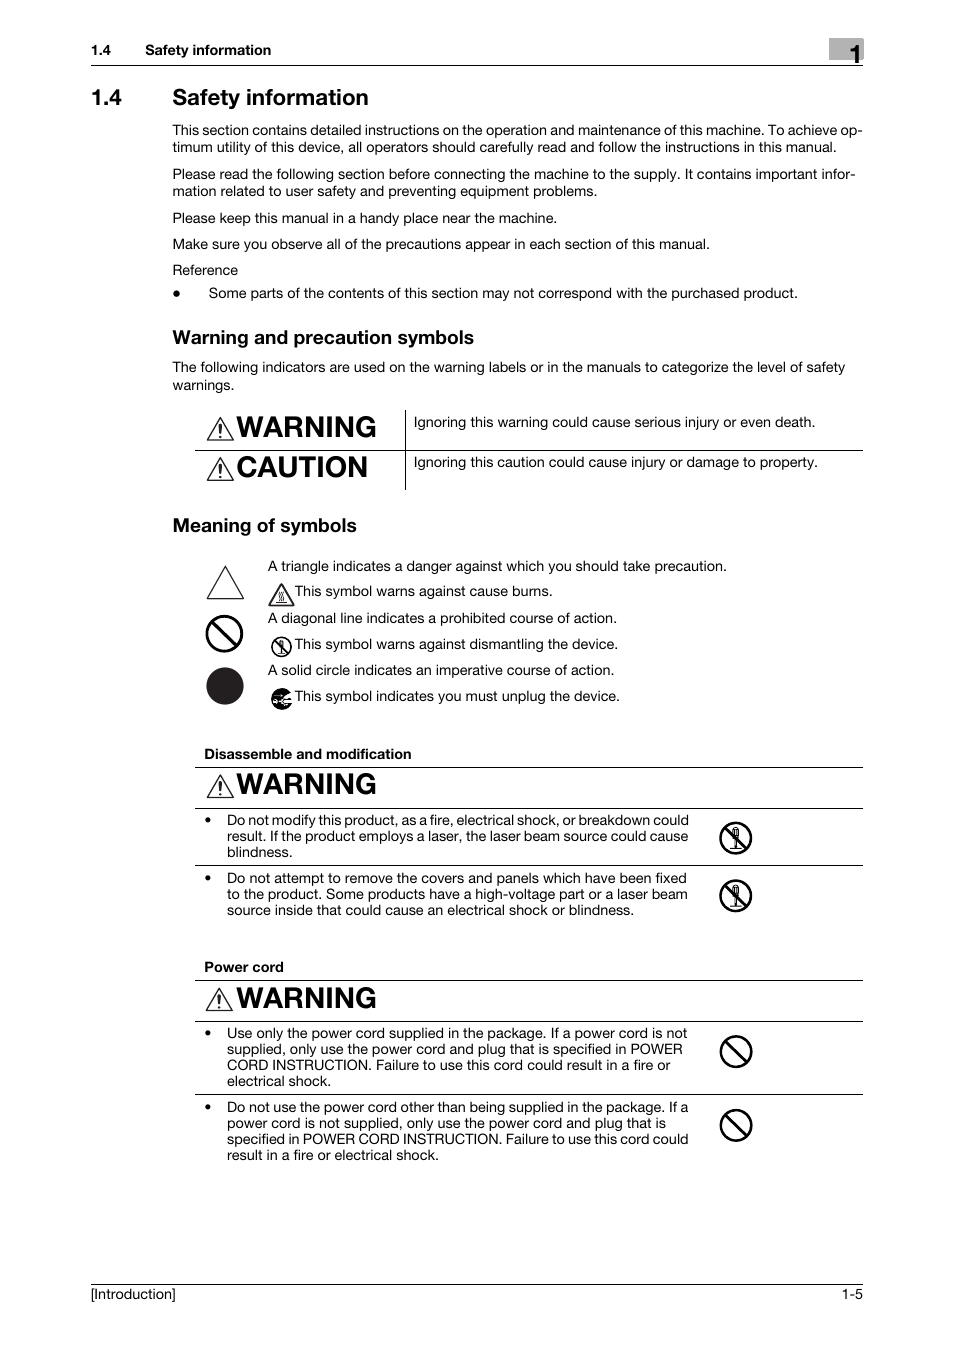 4 safety information, Warning and precaution symbols, Meaning of symbols | Warning, Caution | Konica Minolta bizhub 4050 User Manual | Page 9 / 86